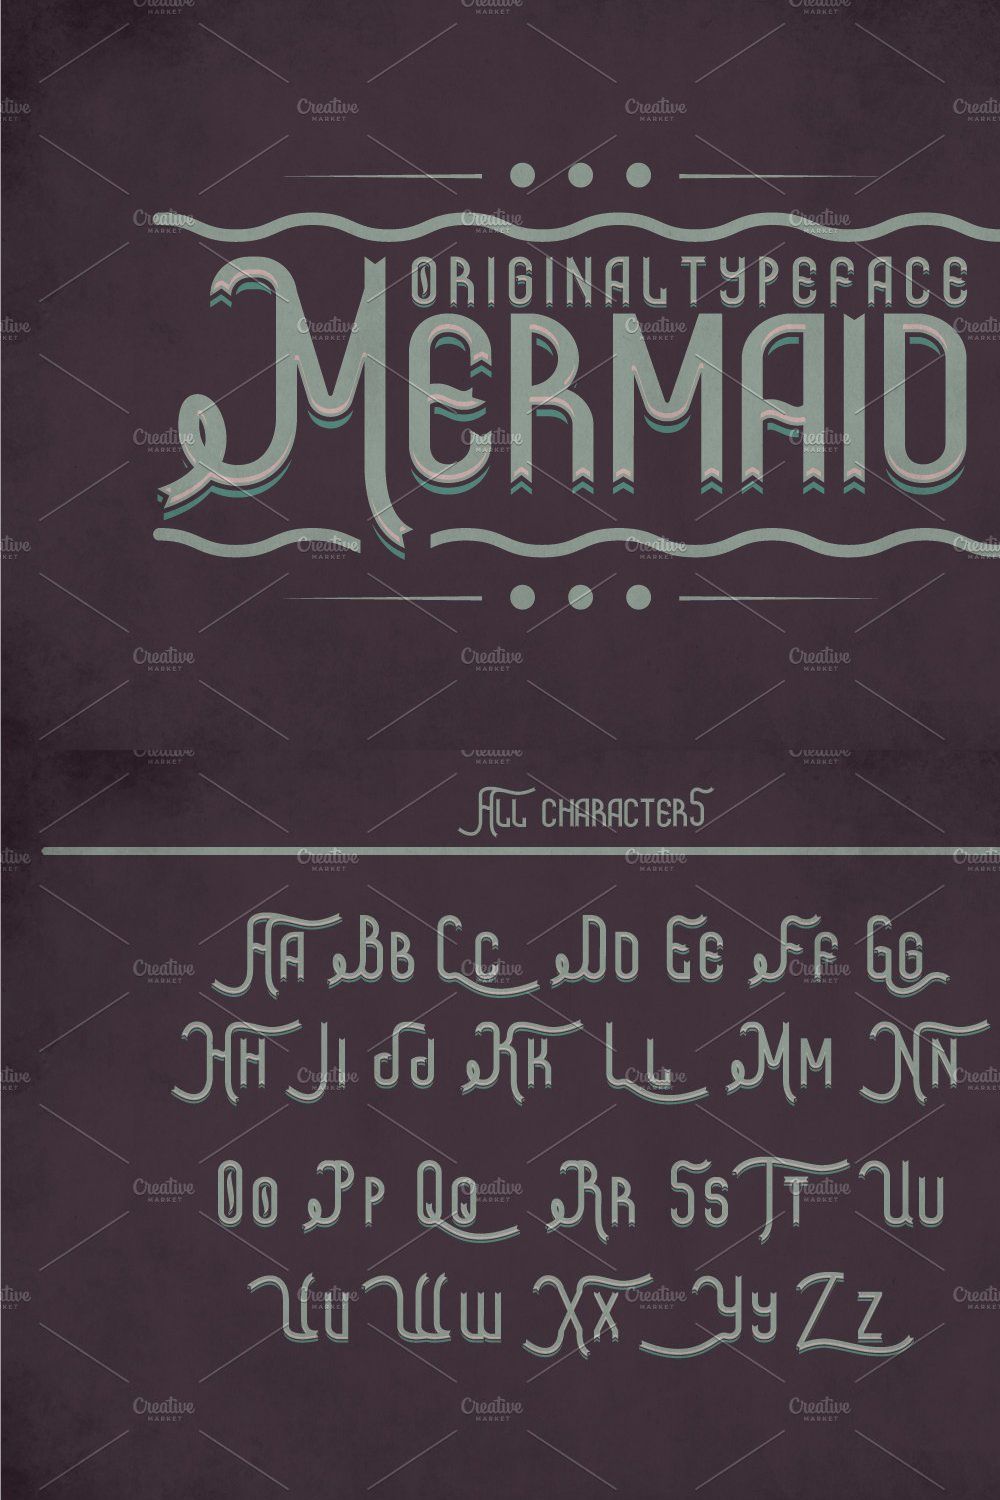 Mermaid Vintage Label Typeface pinterest preview image.